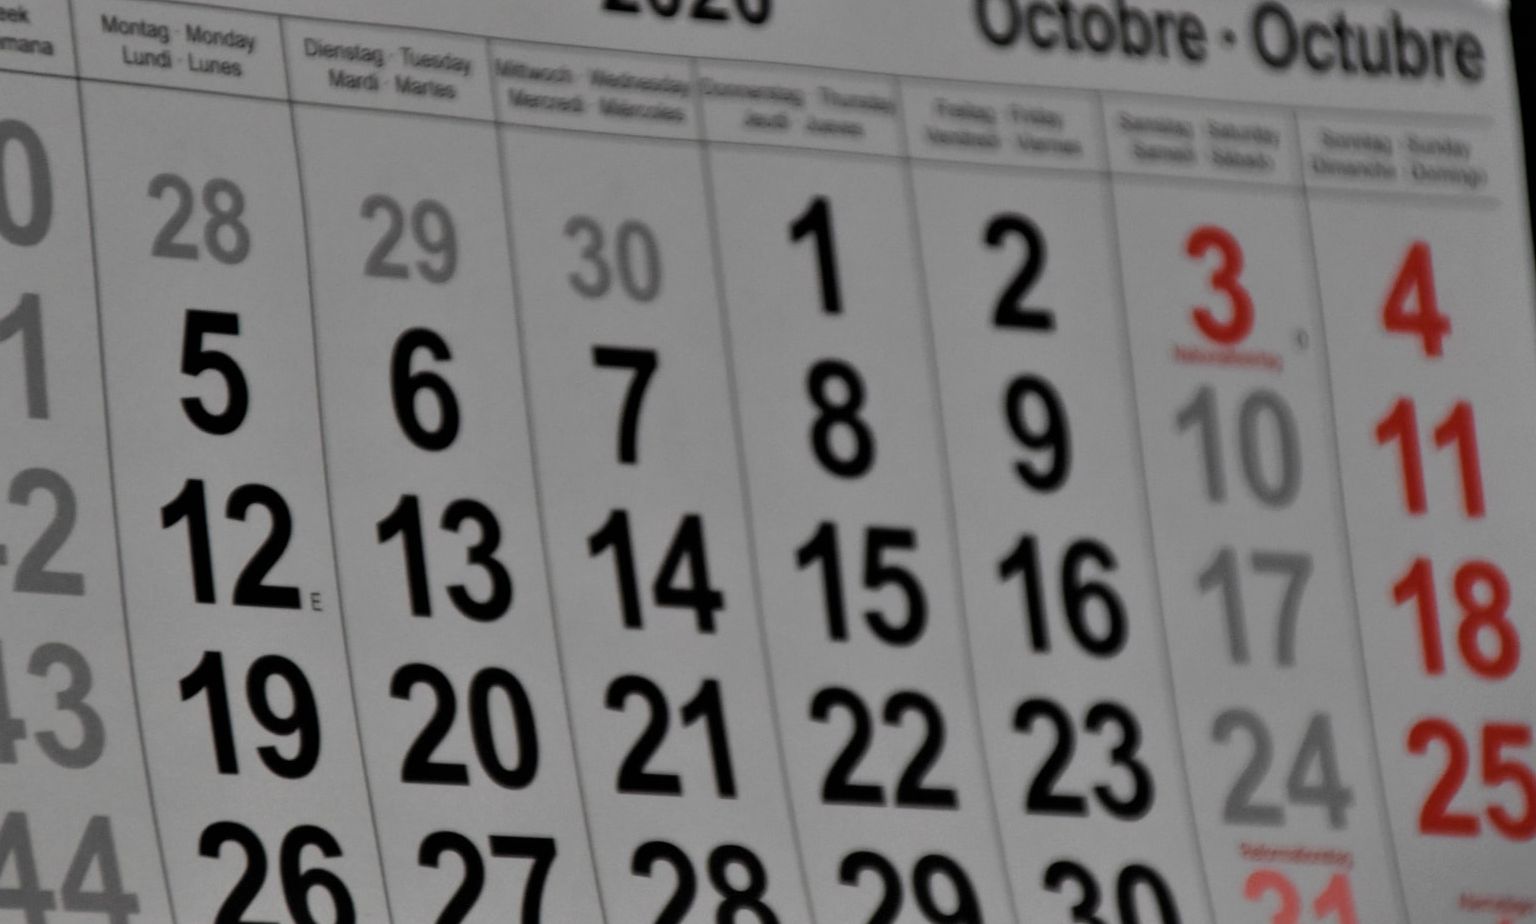 Kalender oktober 2002 lengkap dengan weton